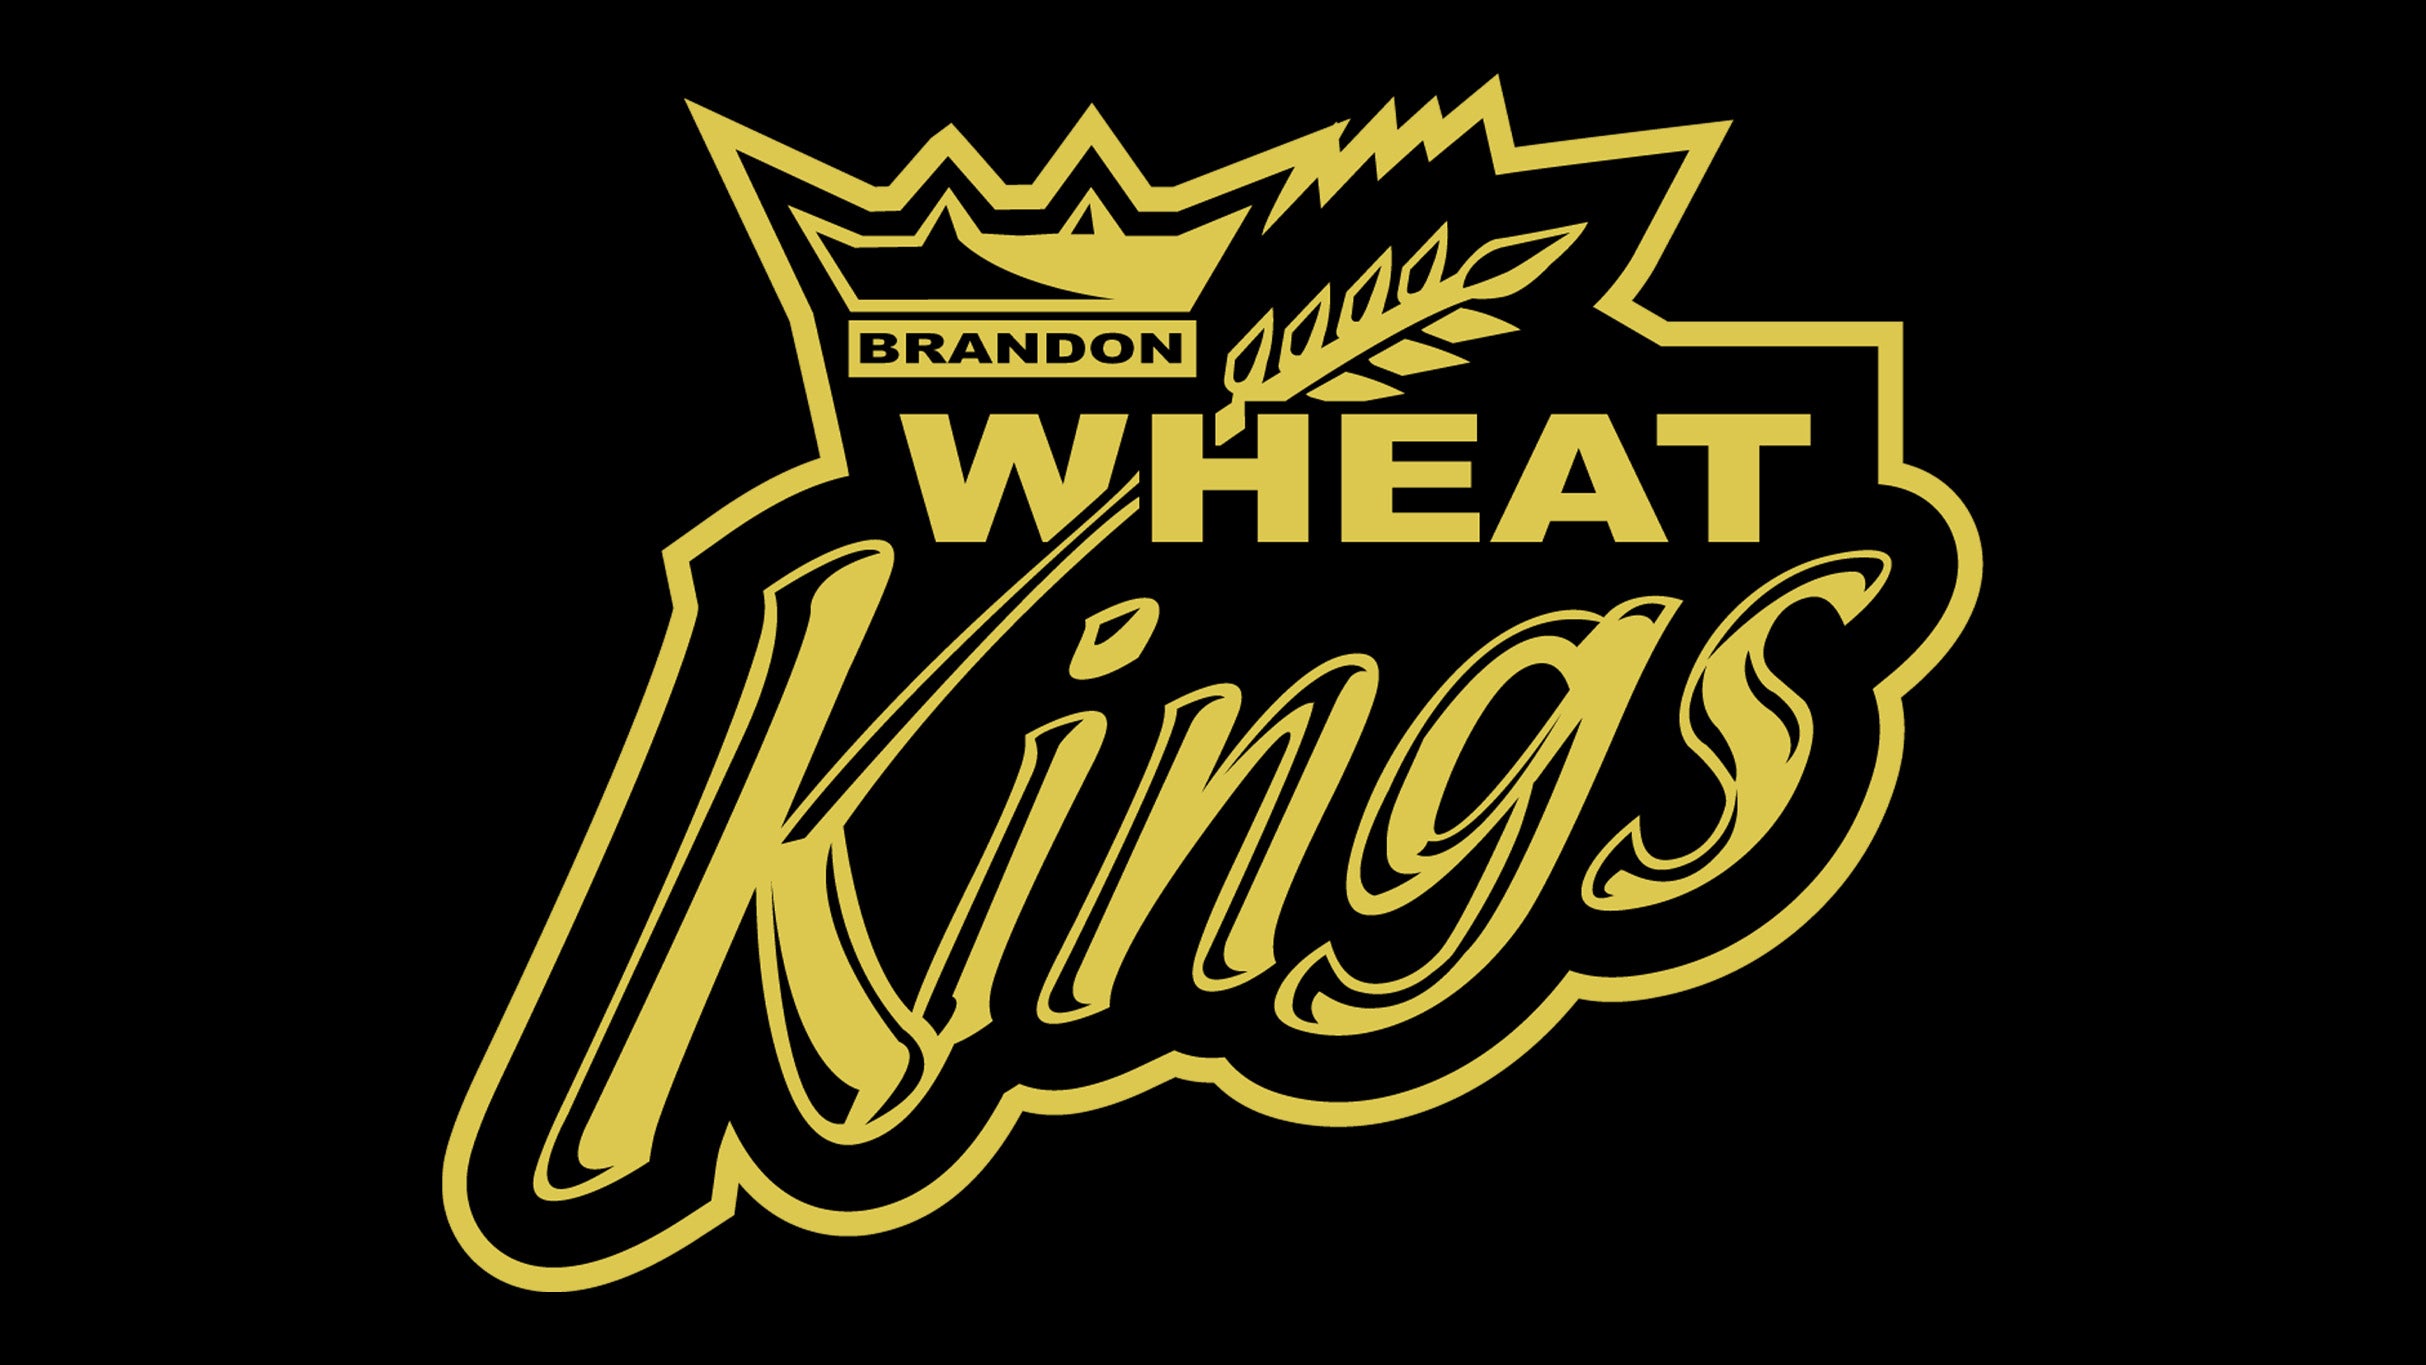 Brandon Wheat Kings vs. Prince Albert Raiders in Brandon promo photo for Exclusive presale offer code